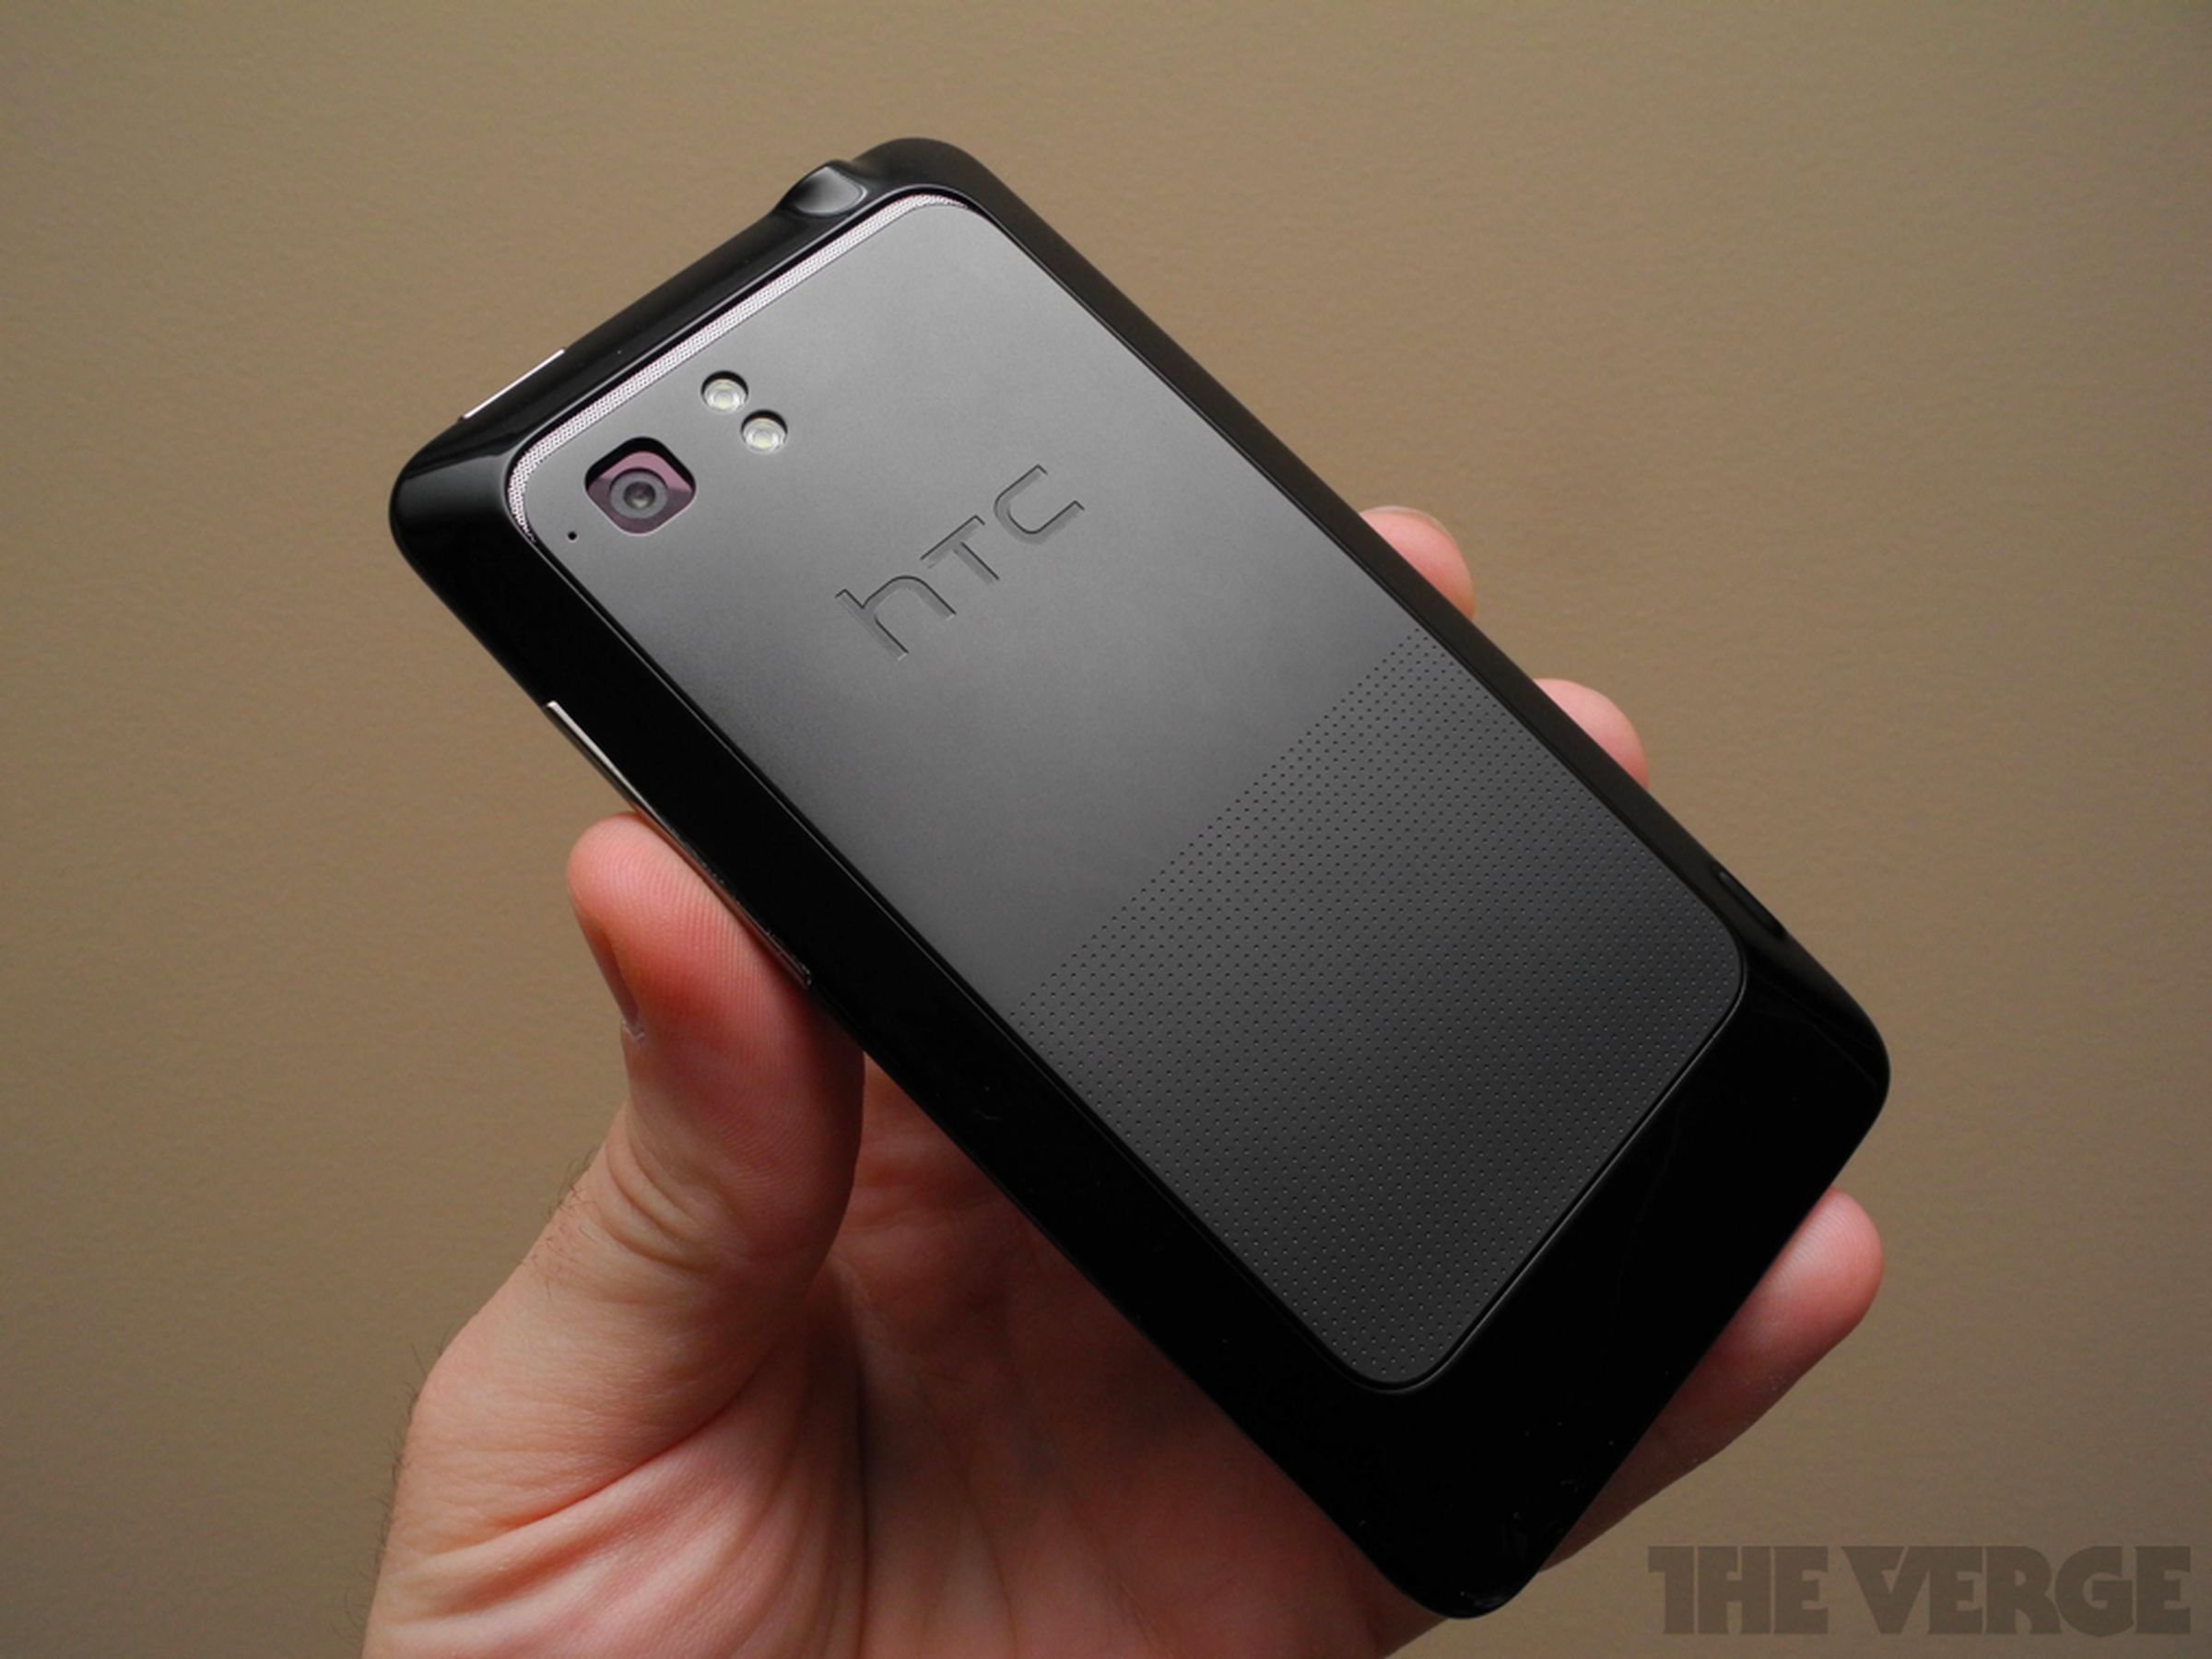 HTC Vivid review